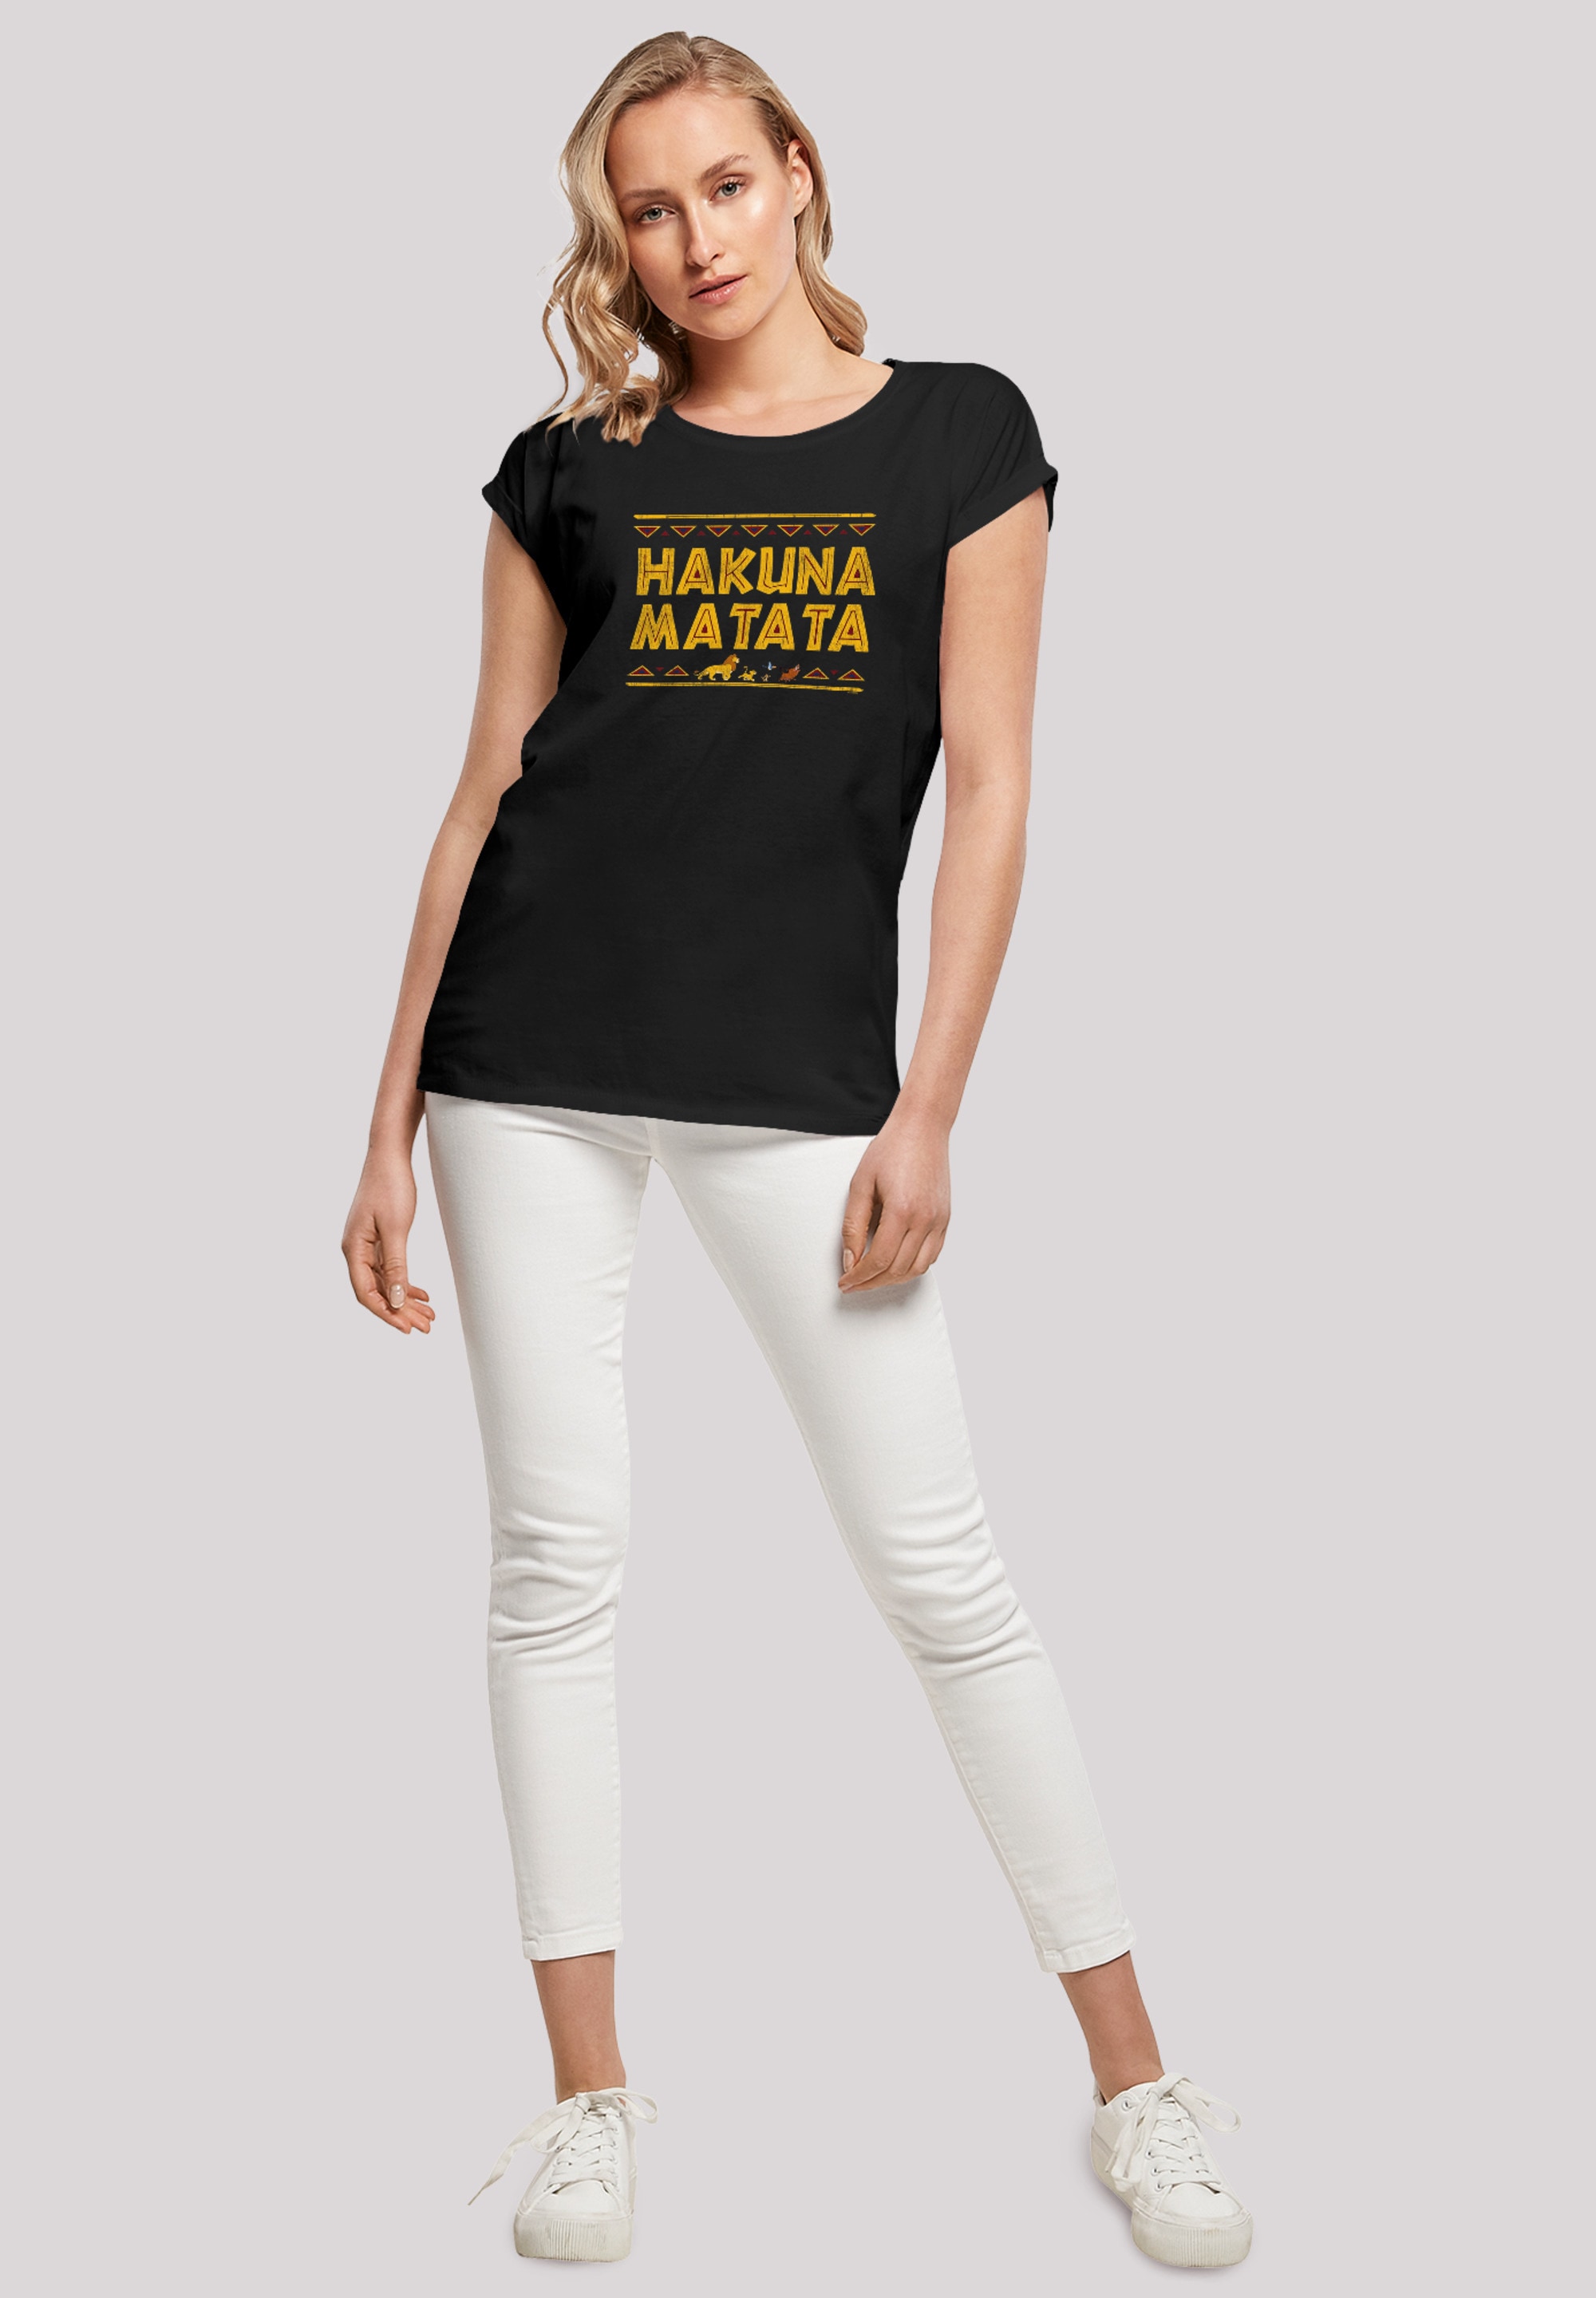 bestellen Matata«, walking der F4NT4STIC Löwen »T-Shirt I\'m Print Disney | T-Shirt König Hakuna